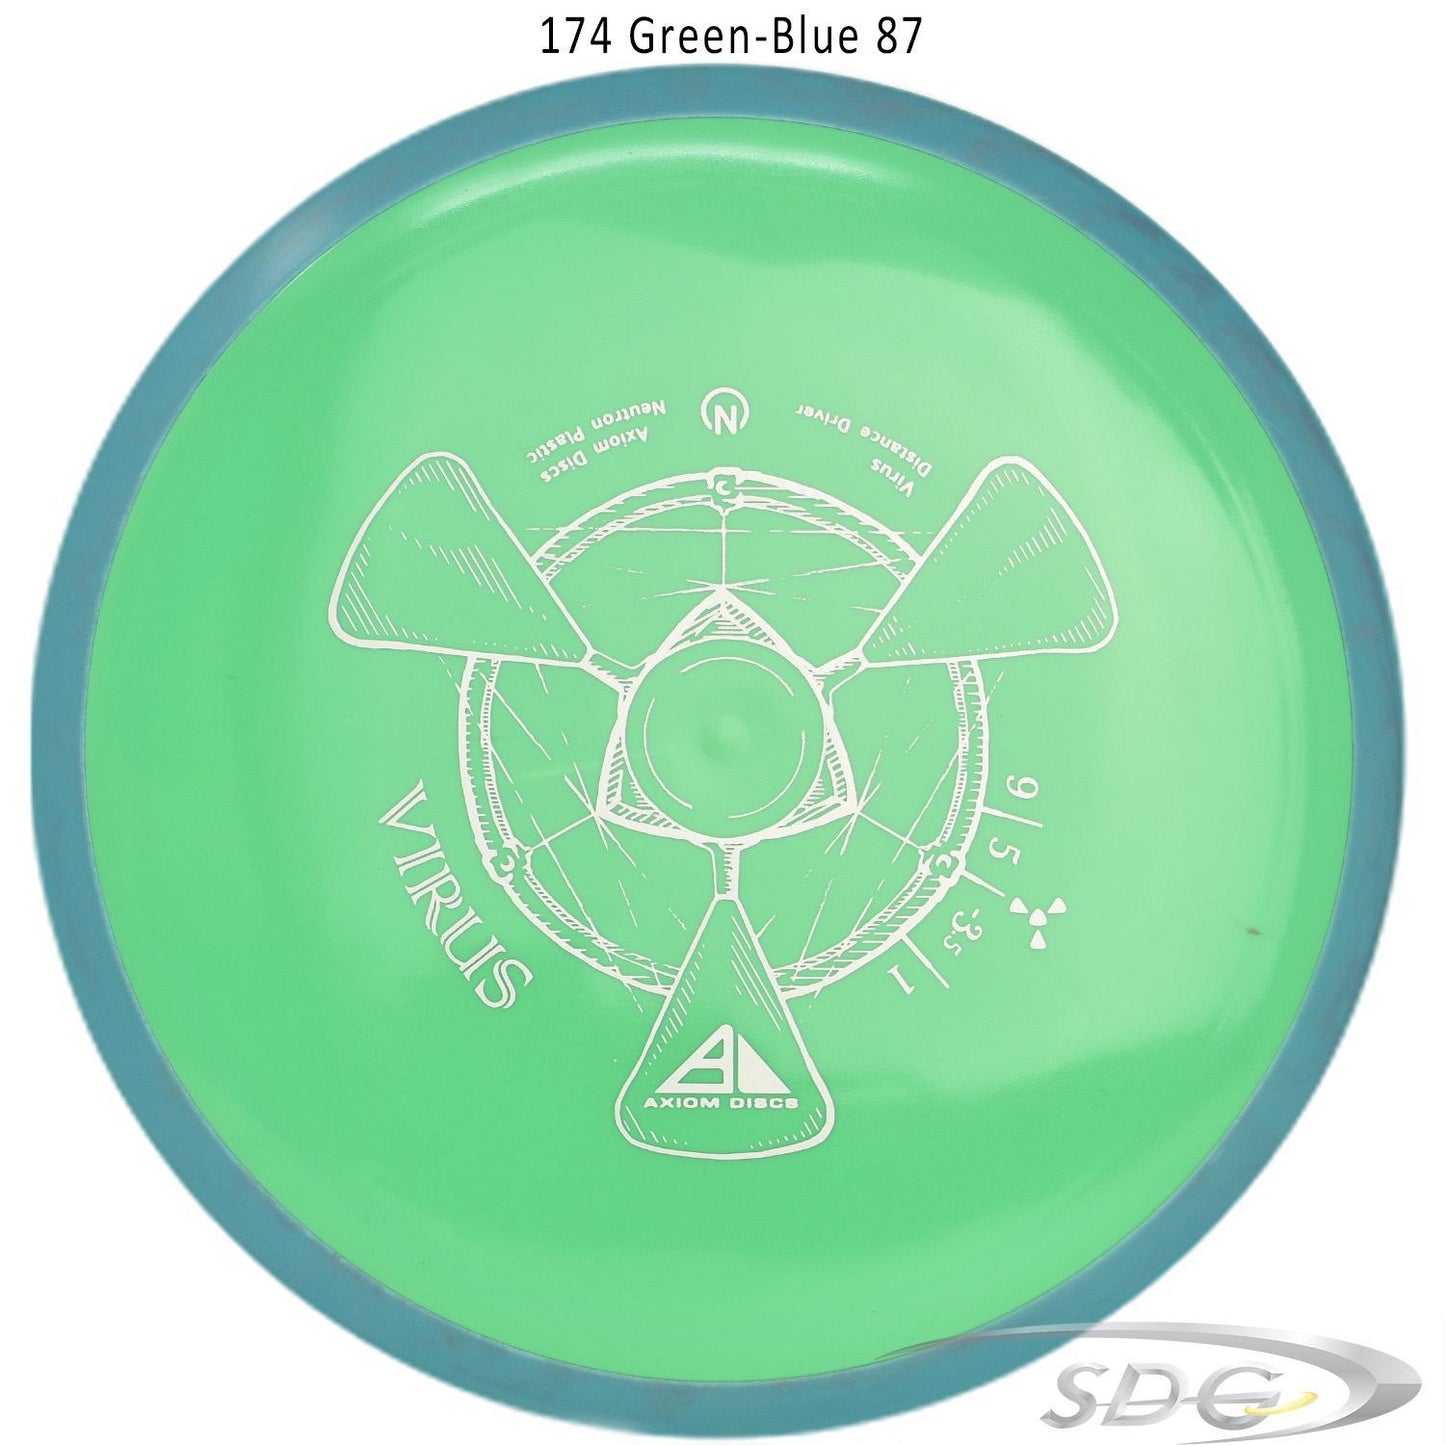 axiom-neutron-virus-disc-golf-distance-driver 174 Green-Blue 87 